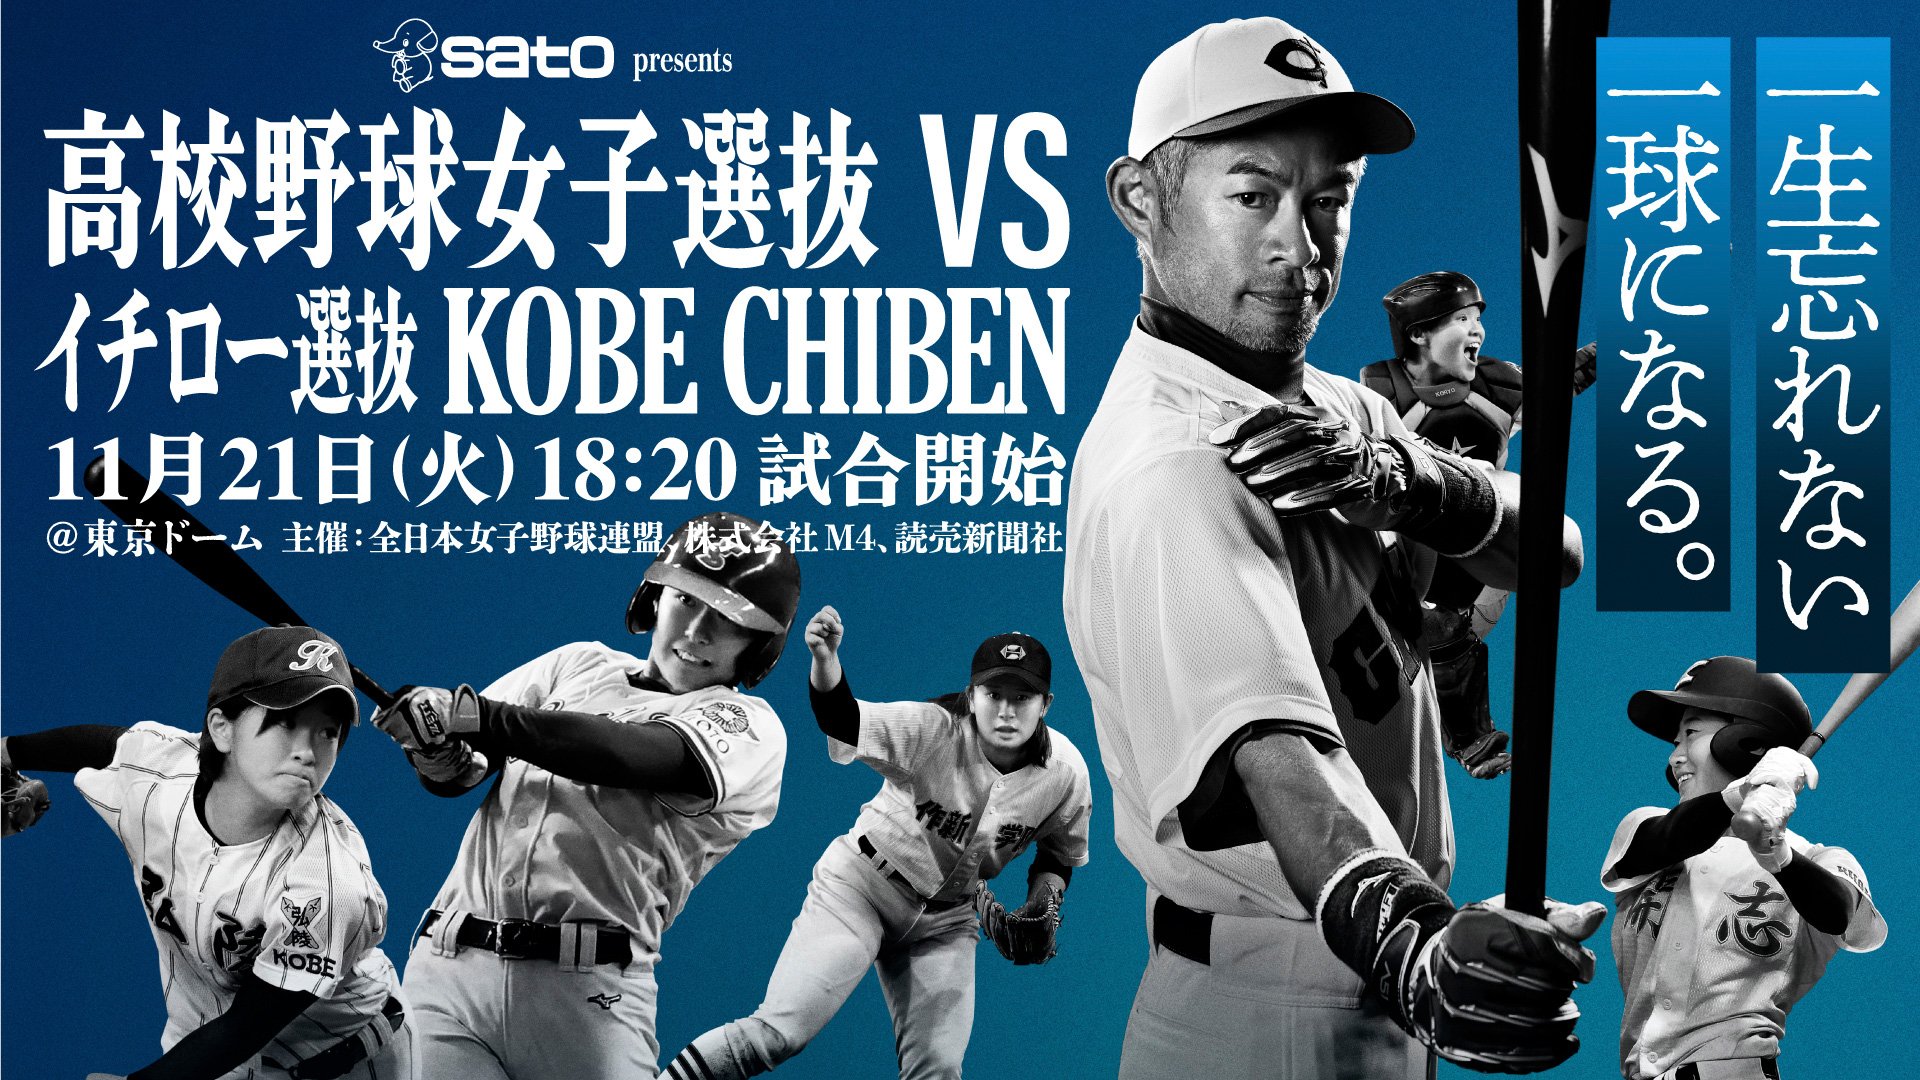 公式】高校野球女子選抜 vs イチロー選抜 KOBE CHIBEN